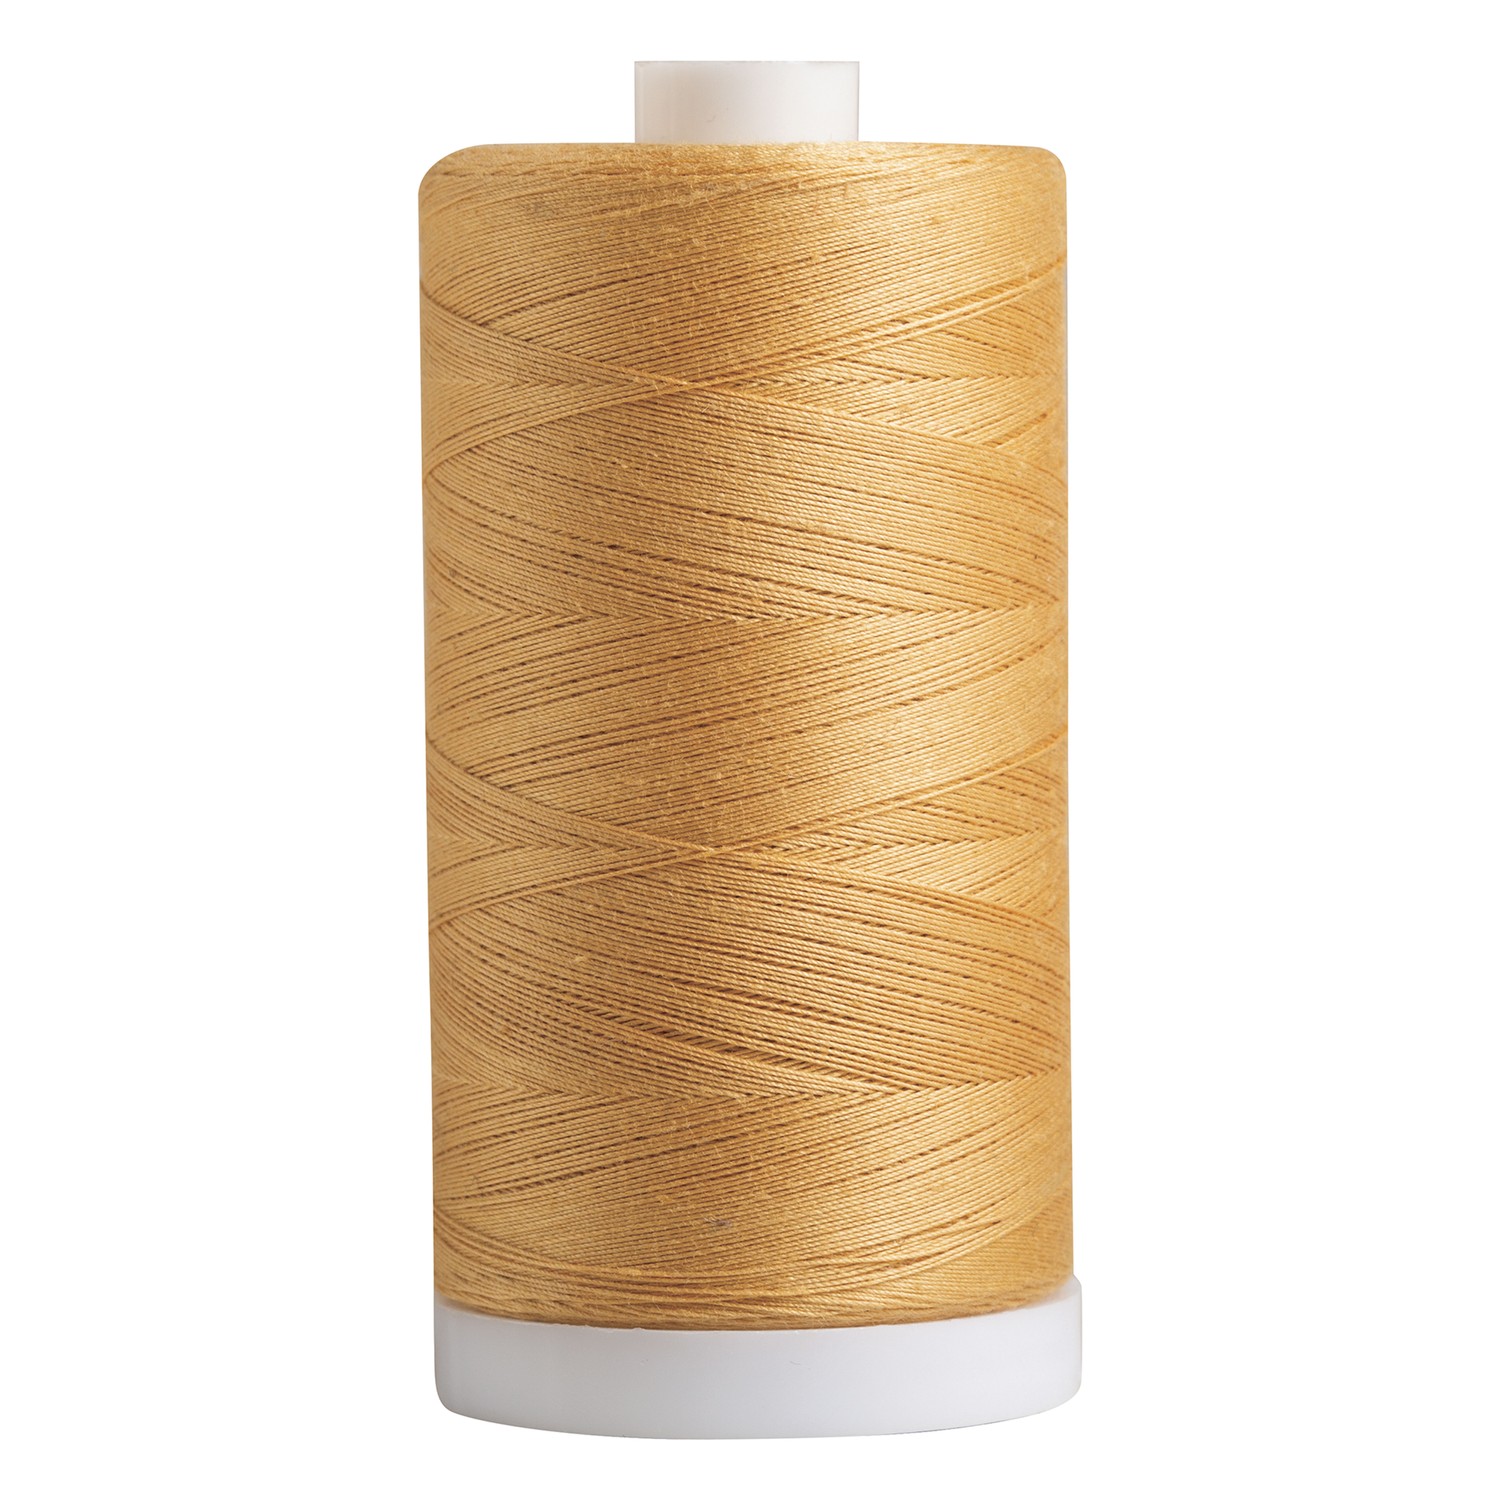 Janome Best 12 Iris Ultra Cotton Quilting Thread - 0047700